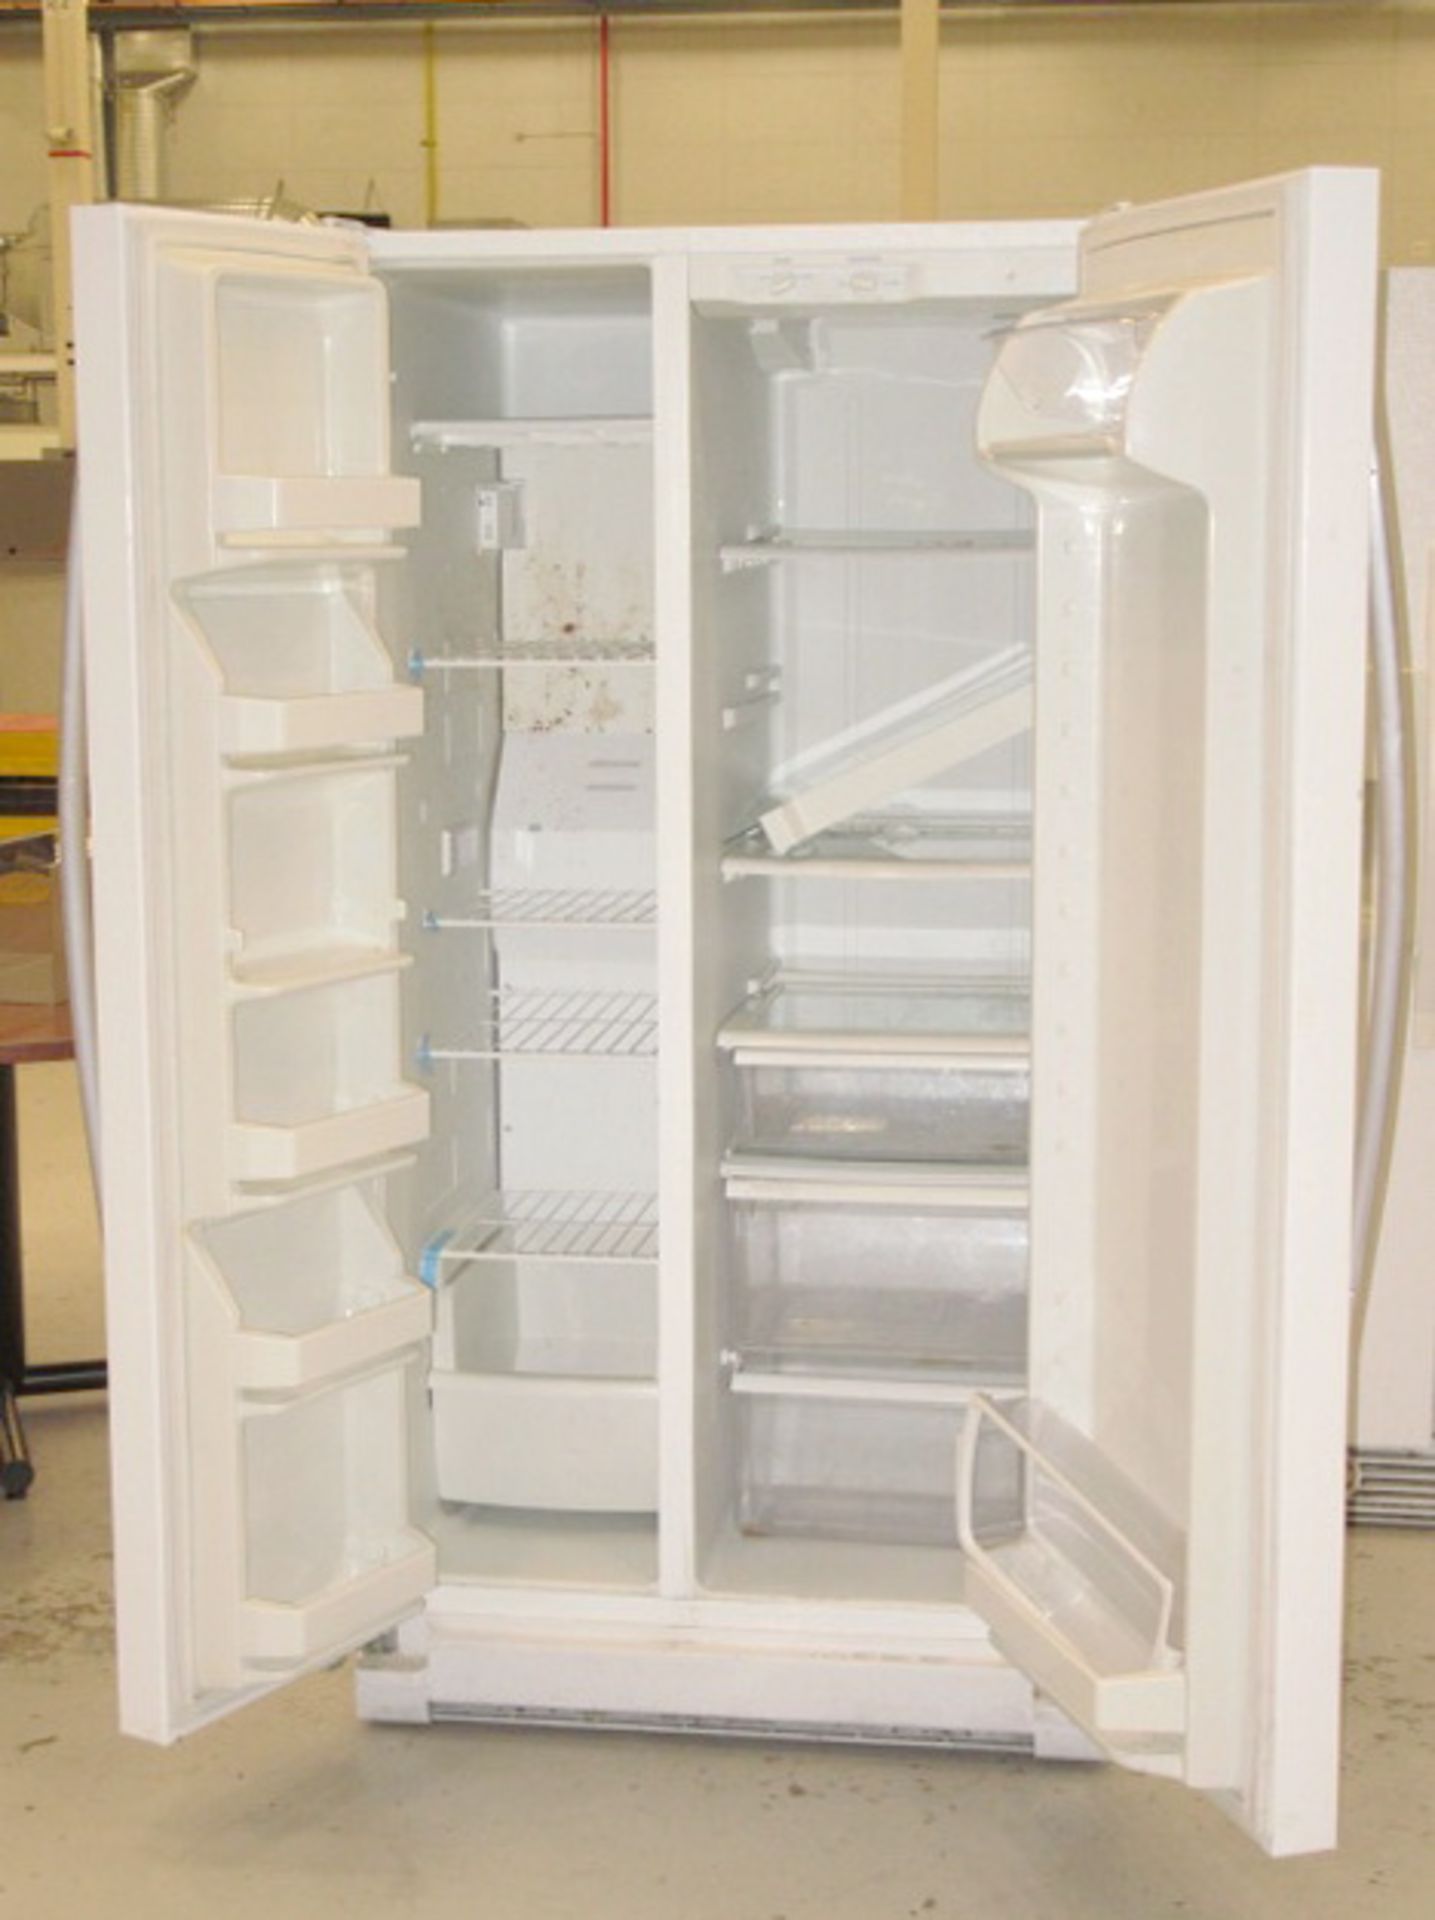 Refrigerator / Freezer - Image 2 of 3